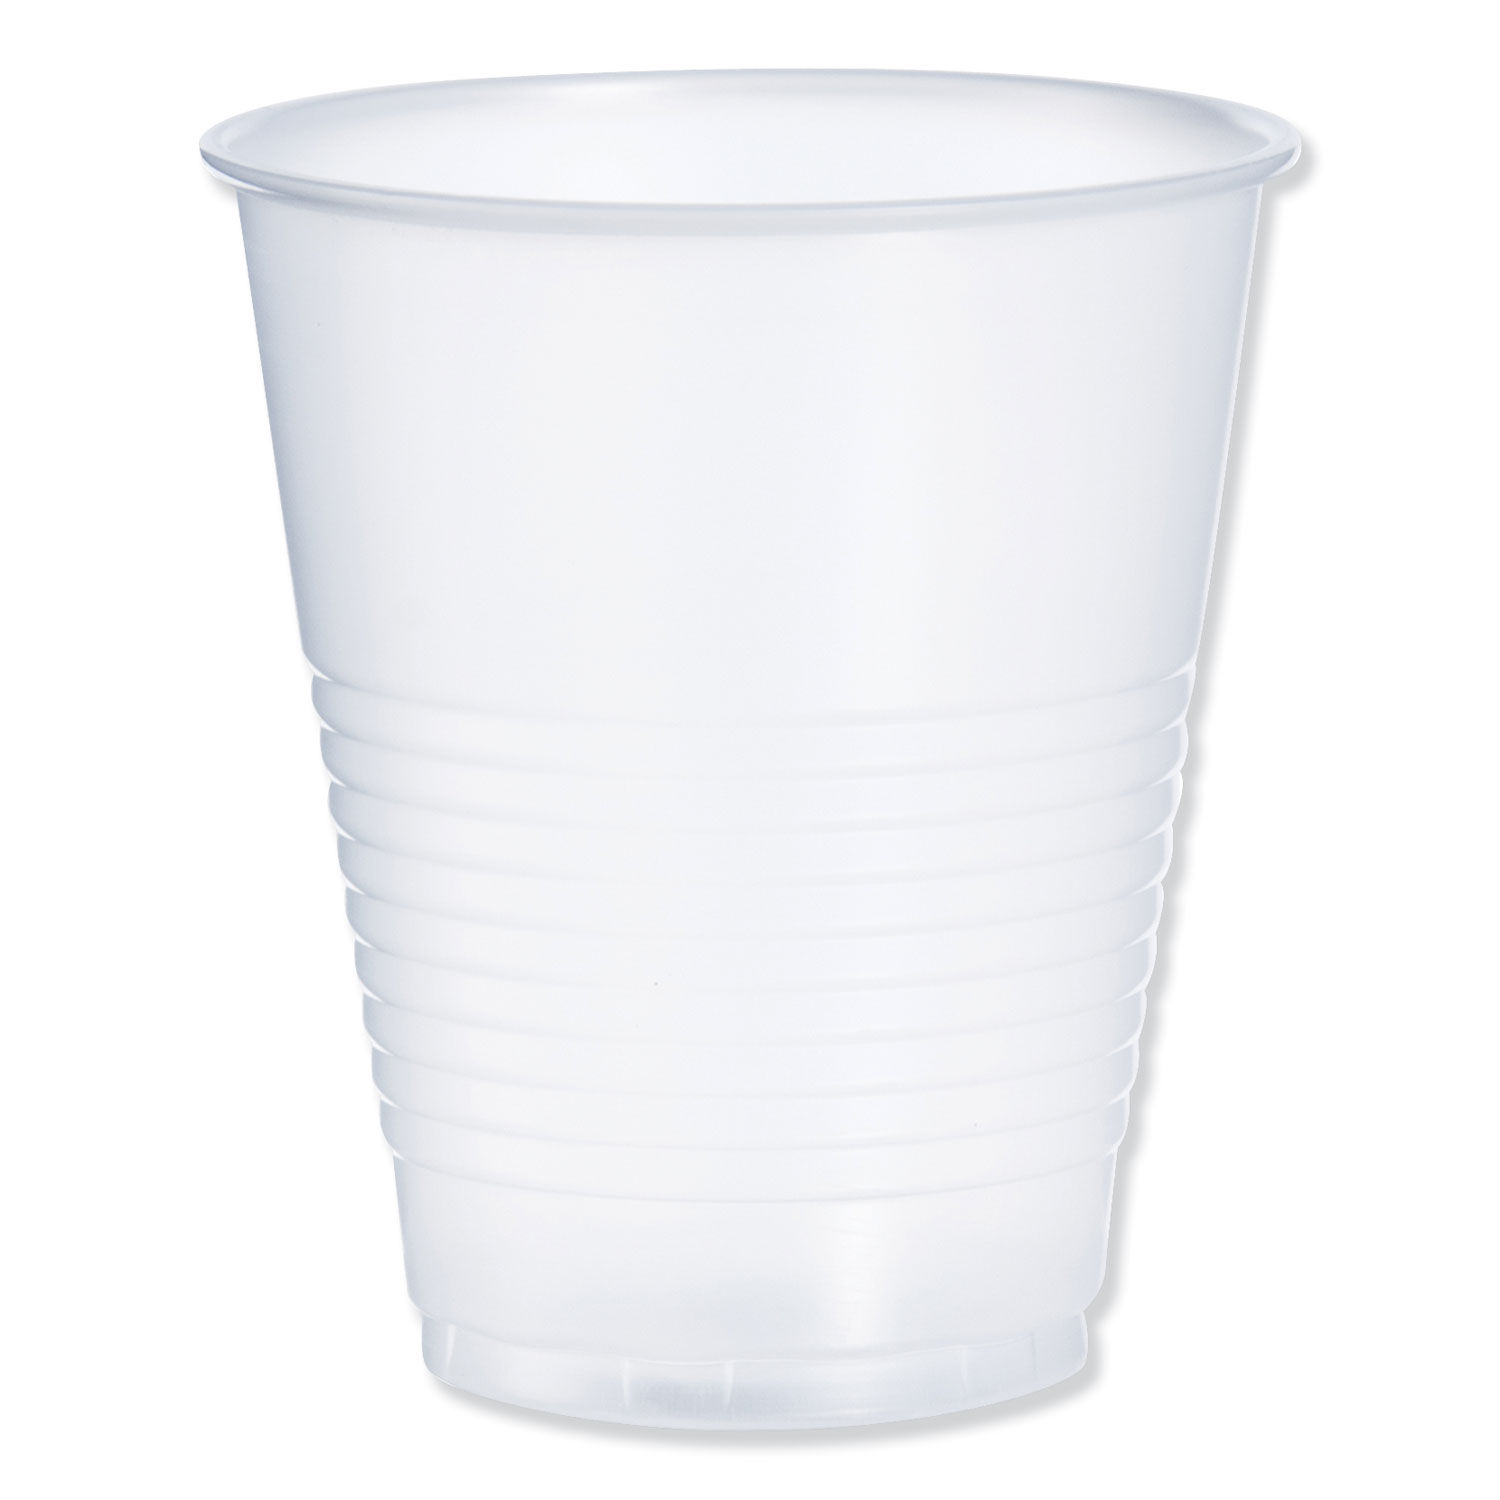 Styrofoam Squat Cup 12oz 25 Count